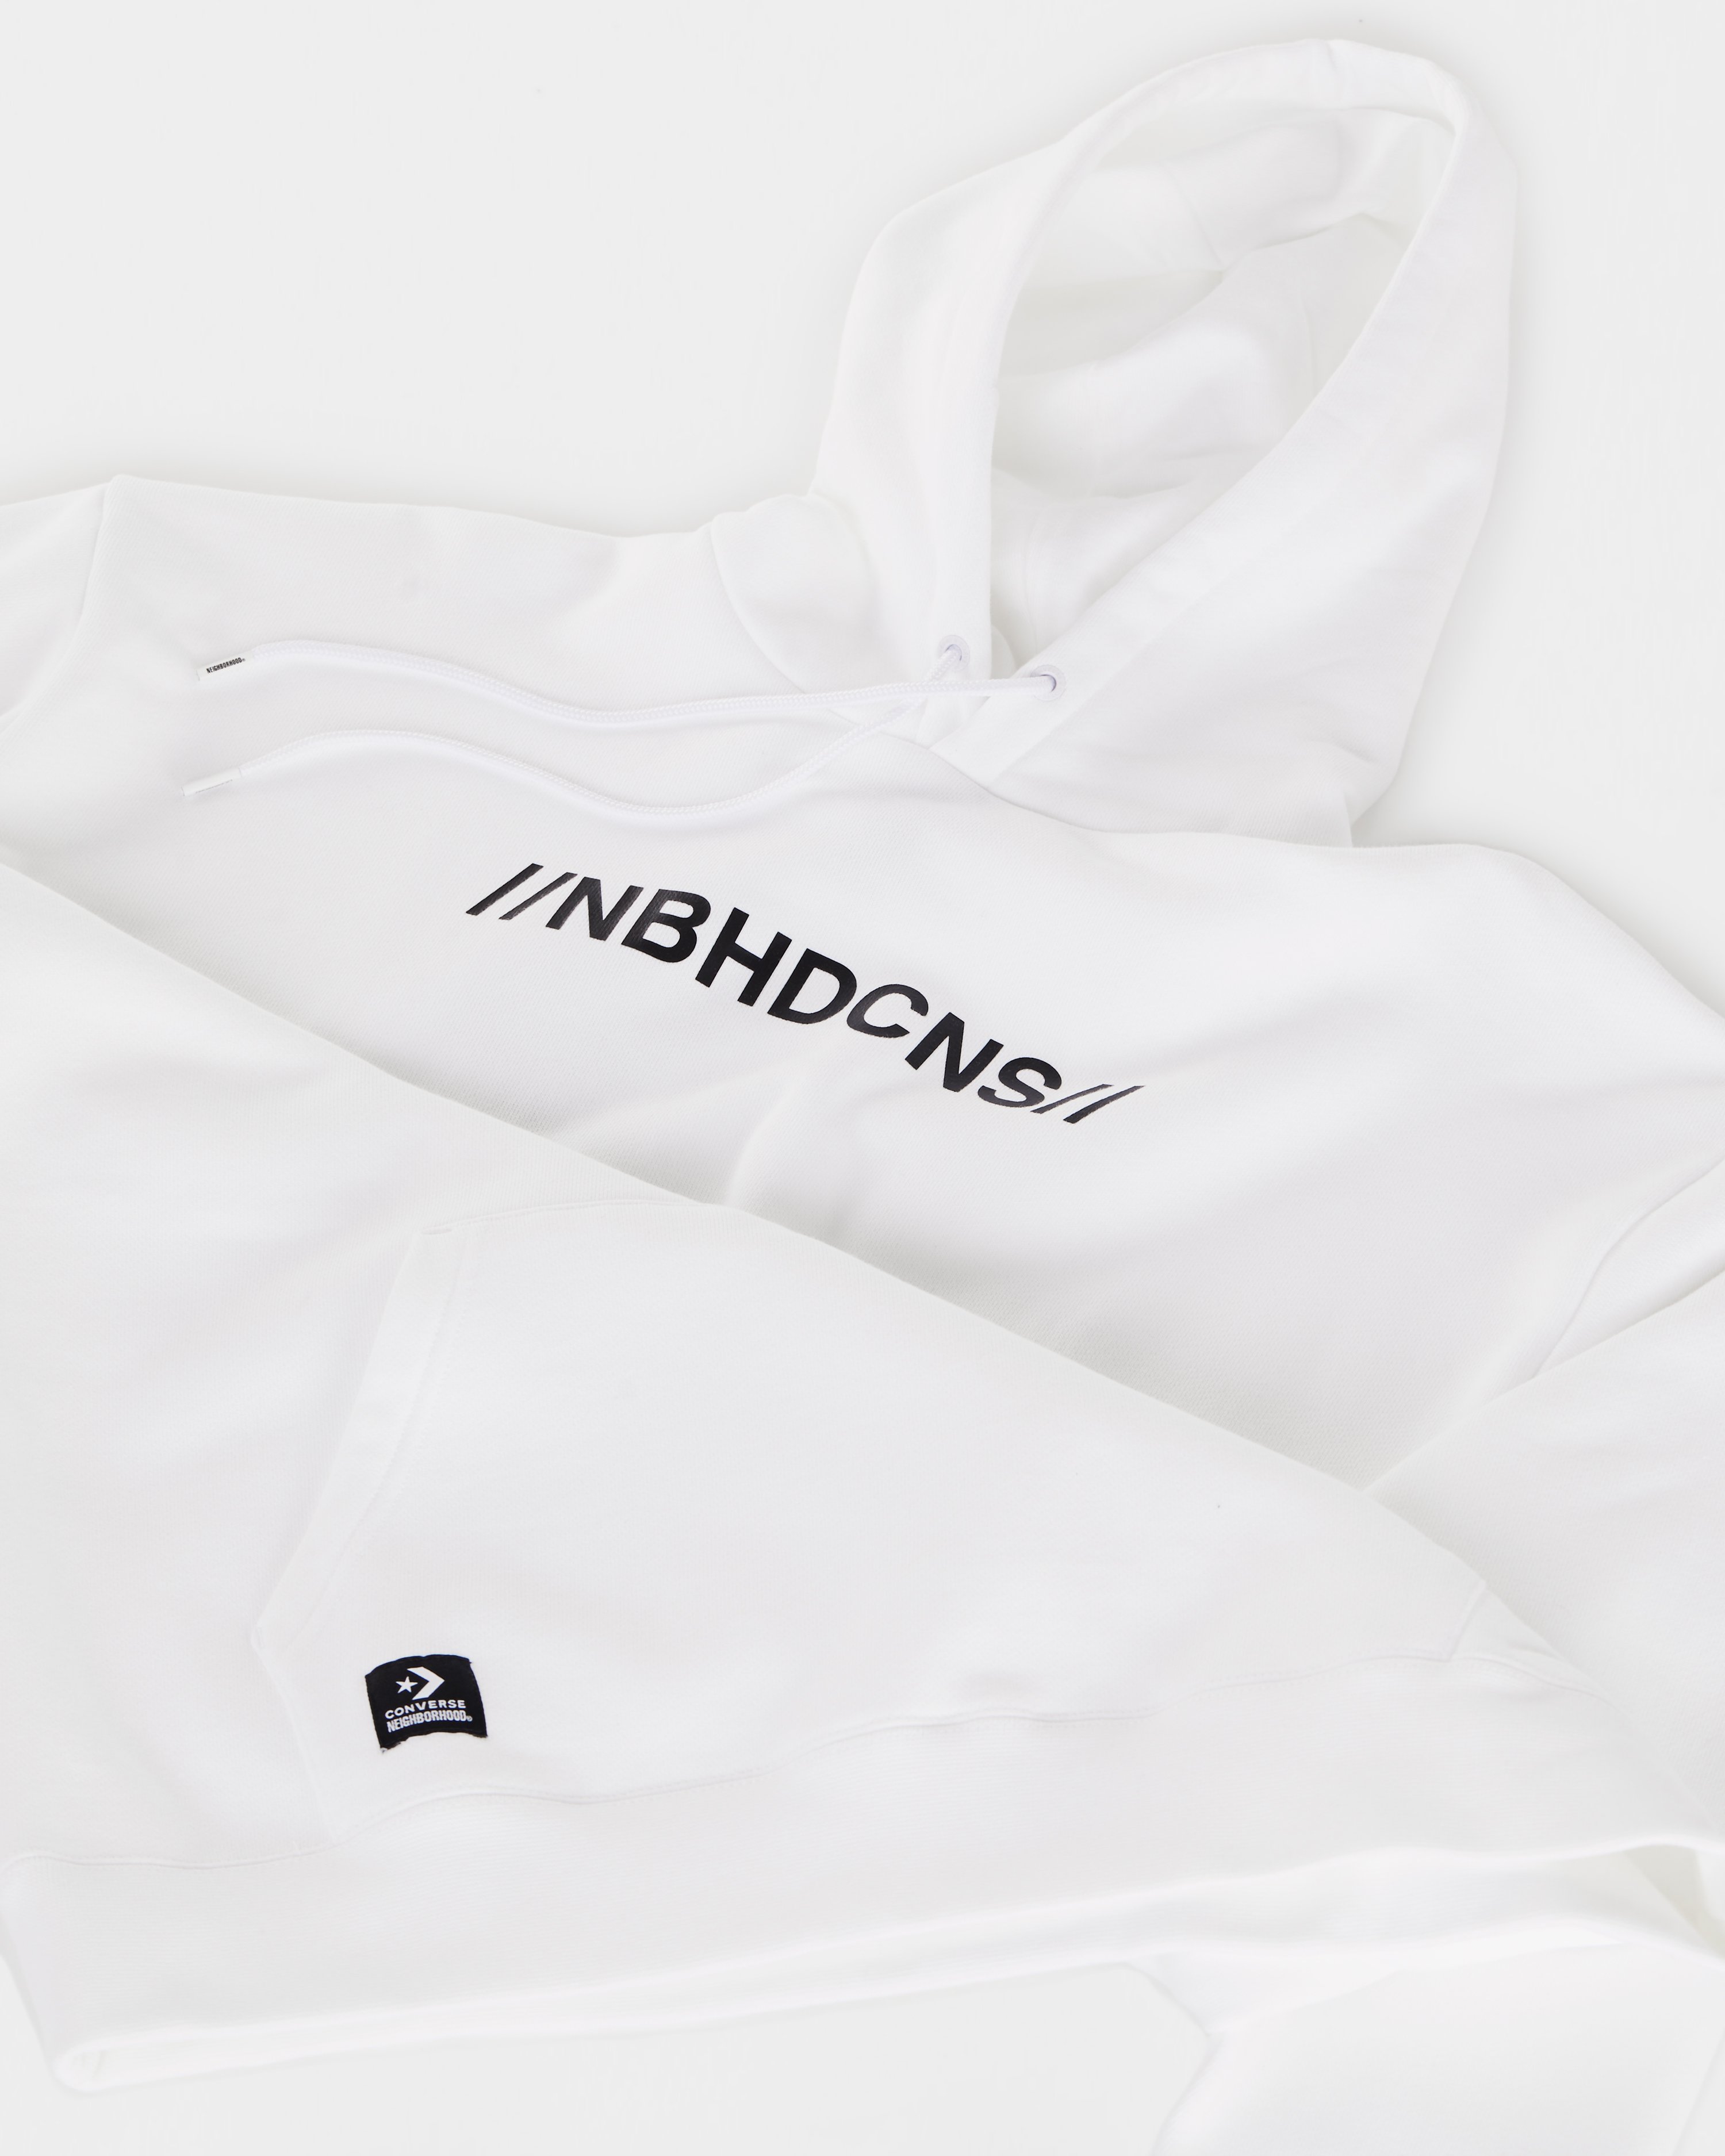 NBHD x Converse - White Hoodie - Clothing - White - Image 3